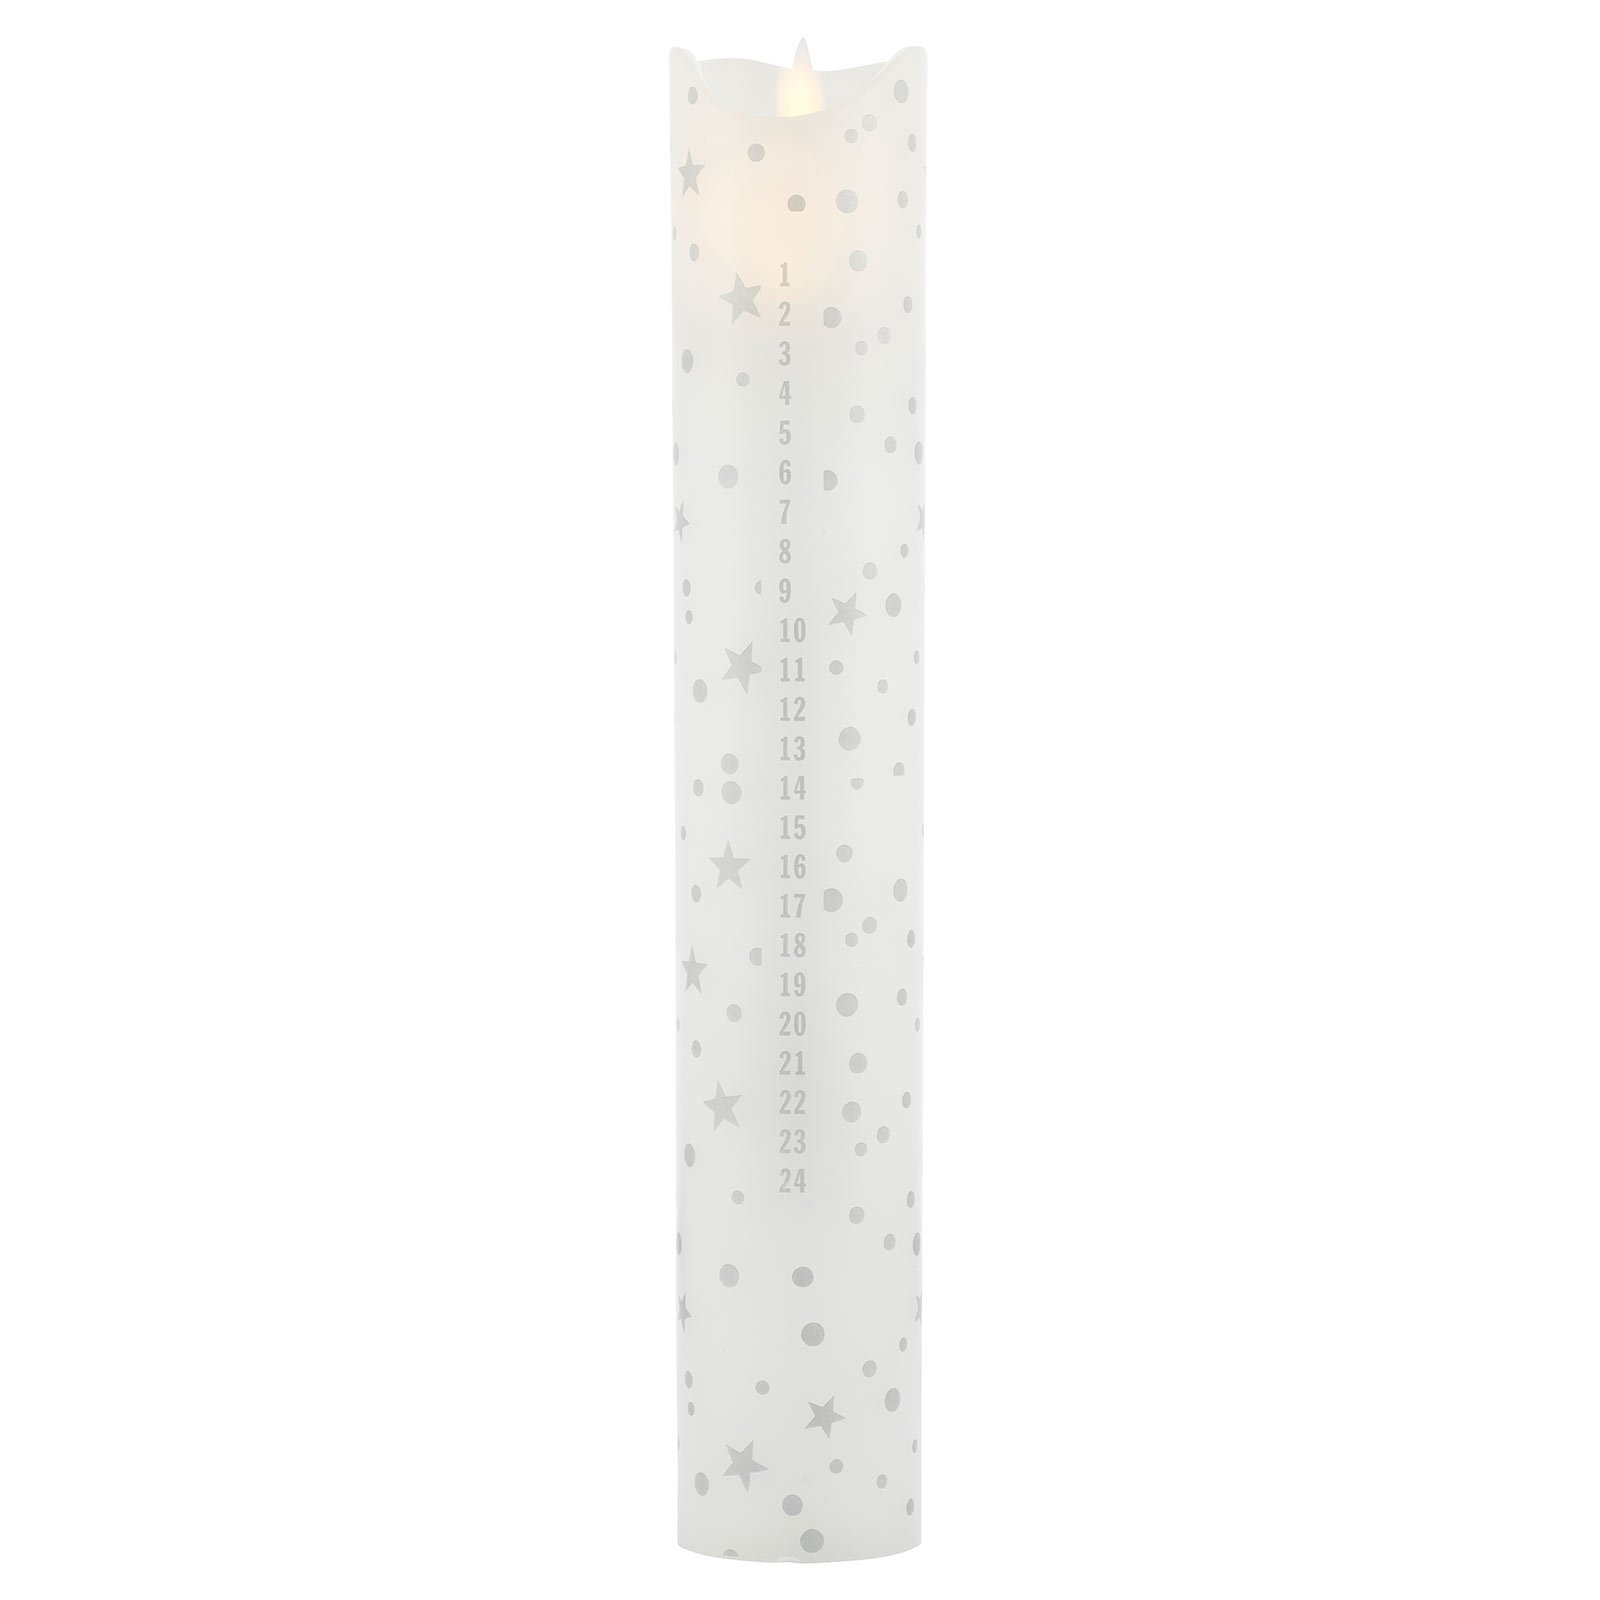 LED candle Sara Calendar, white/romantic, height 29 cm